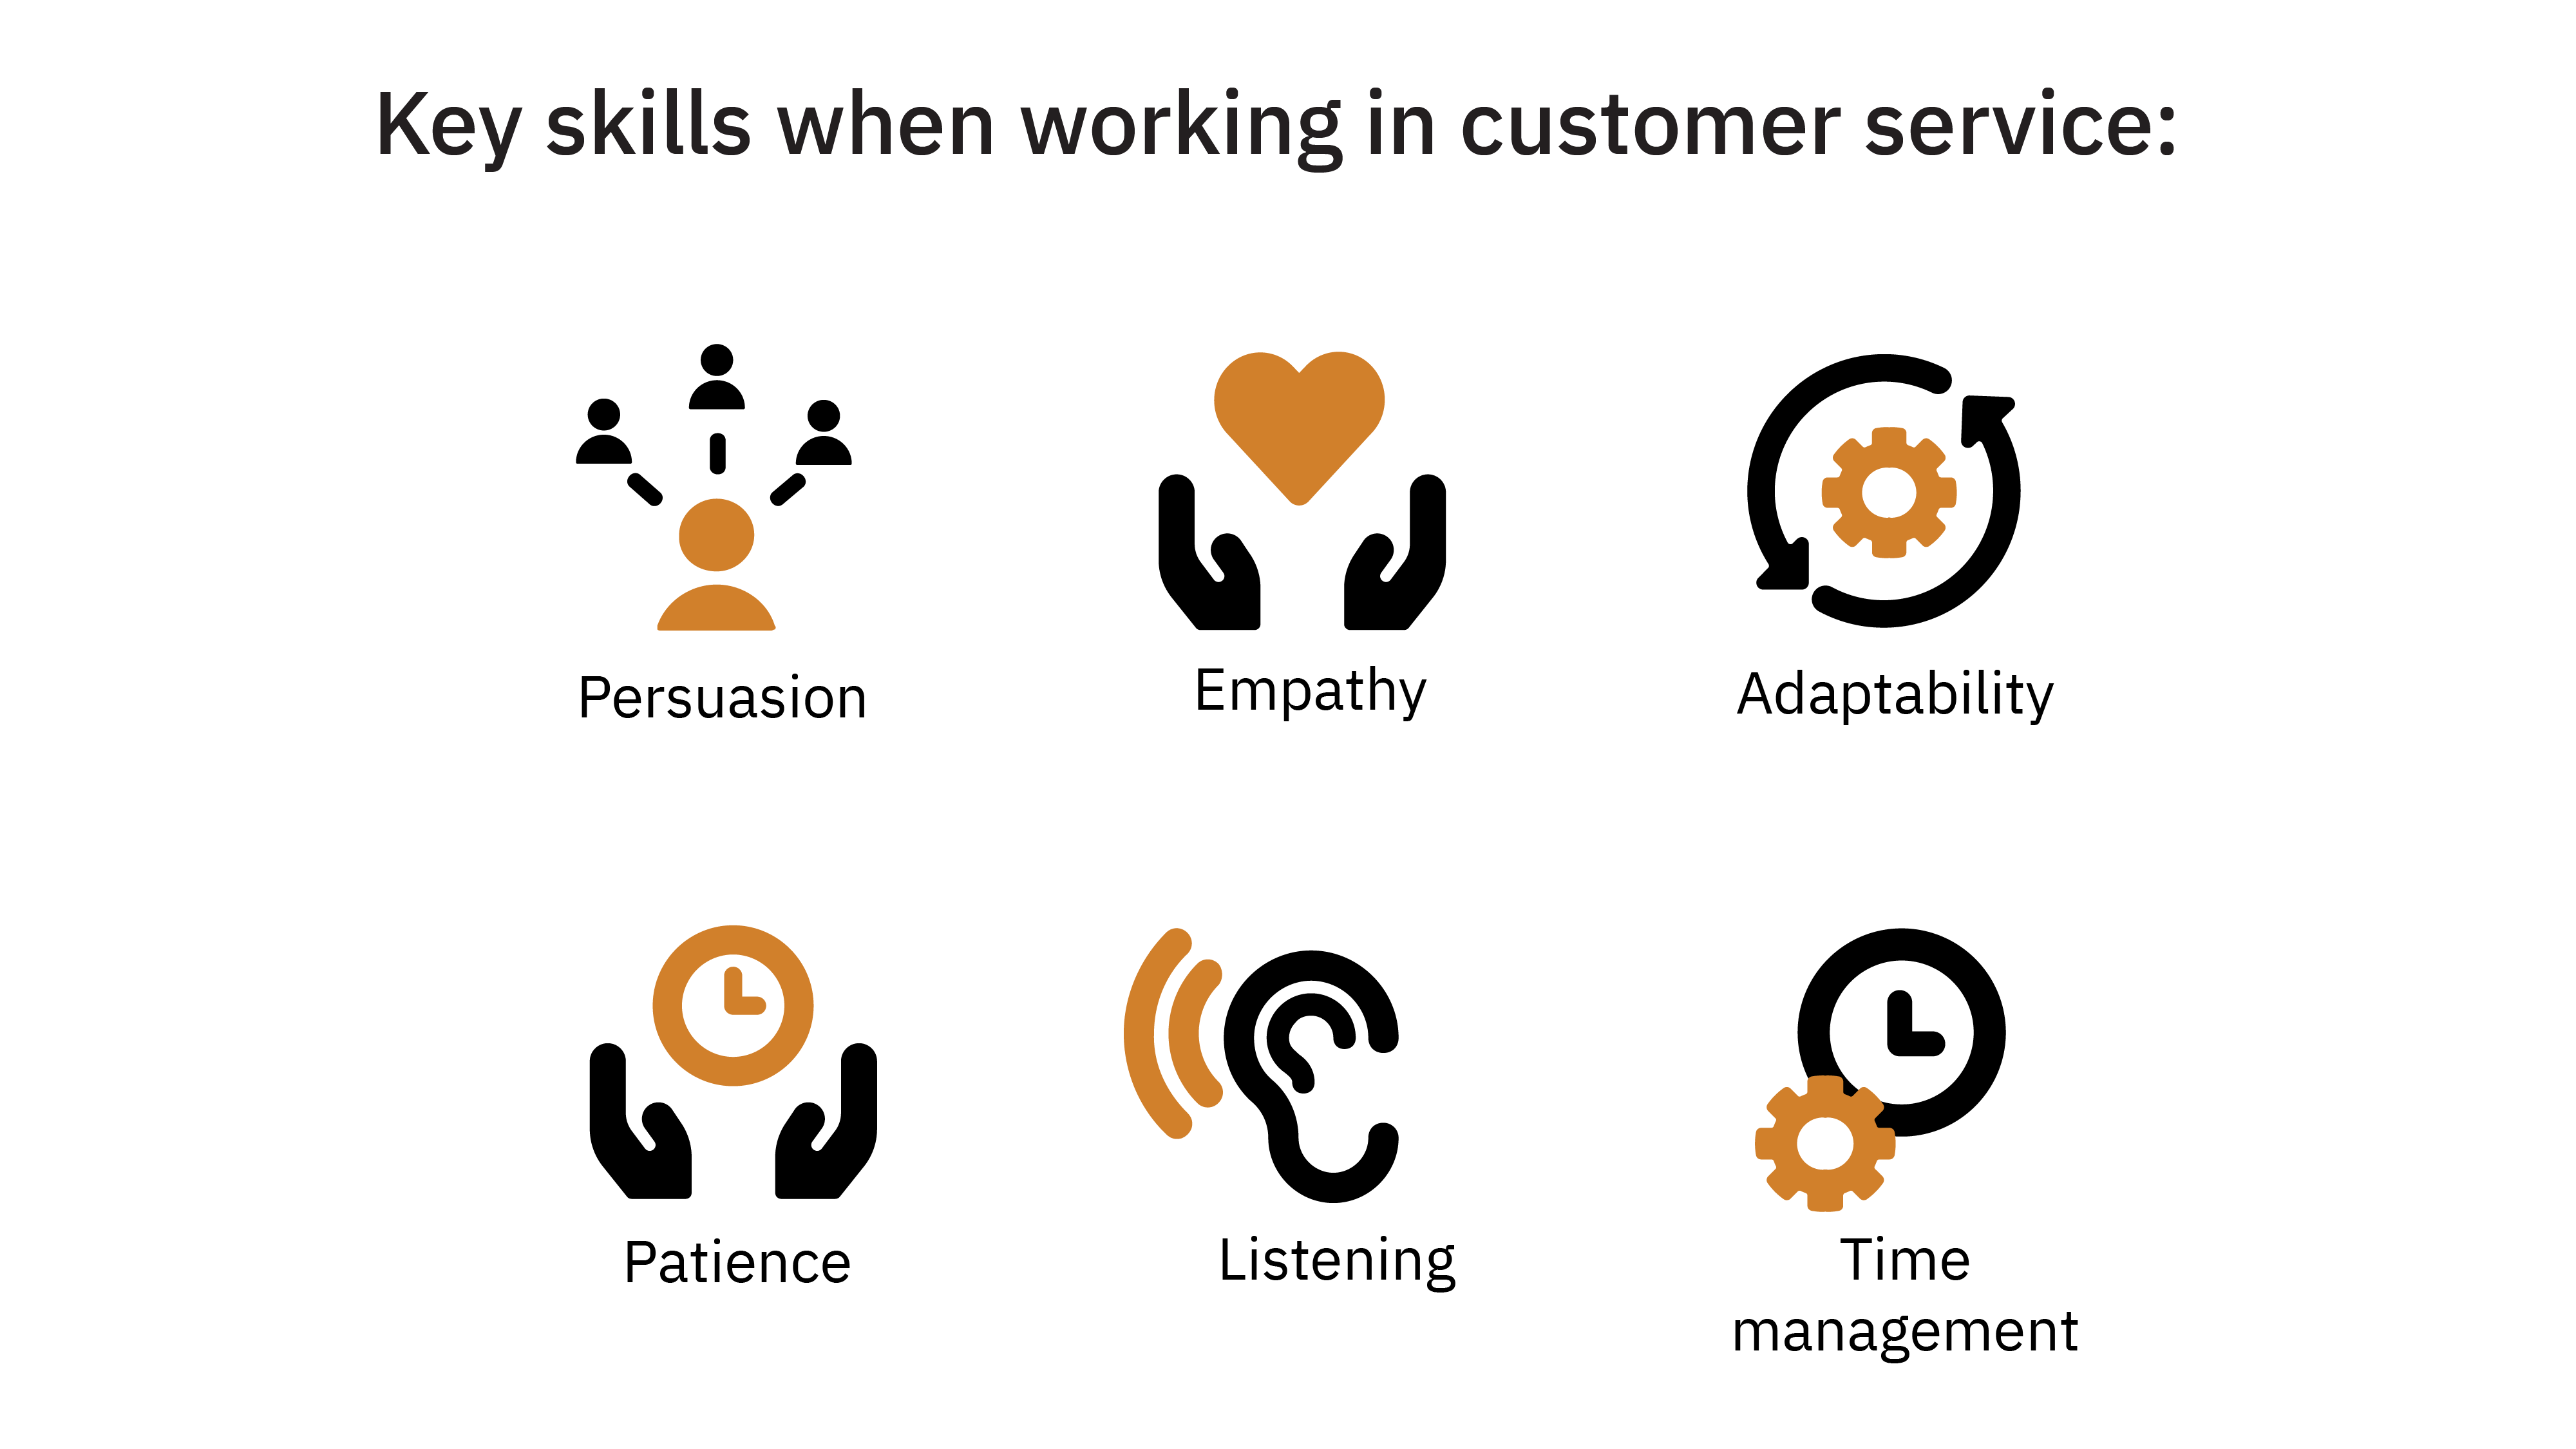 Key skills for customer service representatives